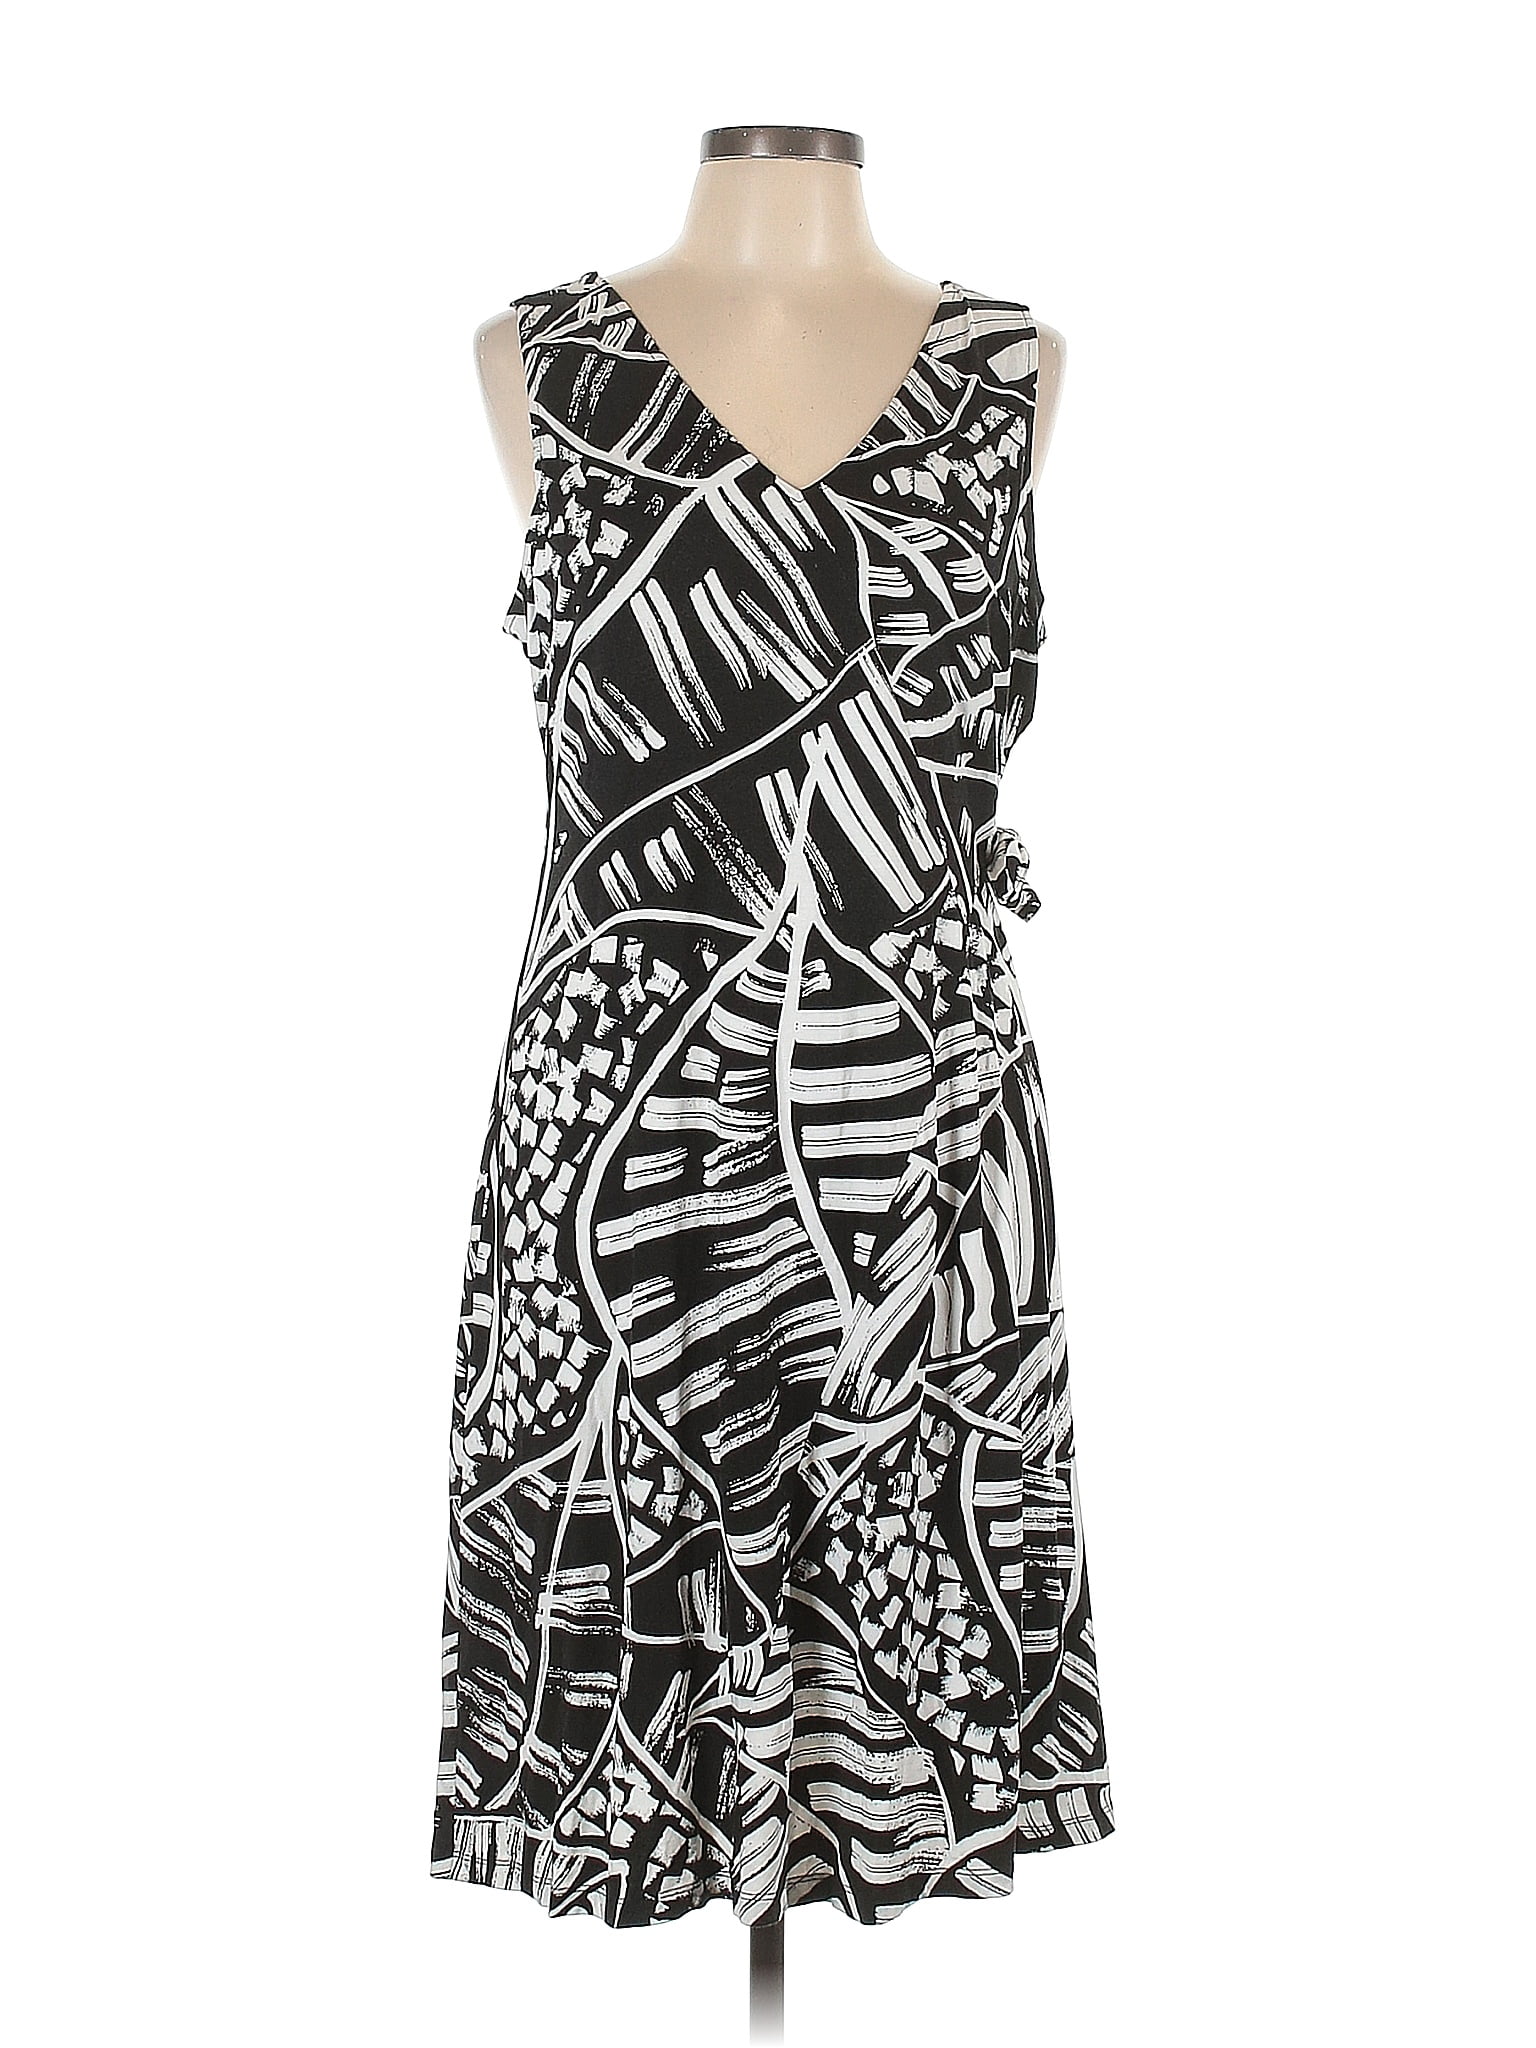 Nic + Zoe Multi Color Black Casual Dress Size L - 79% off | thredUP